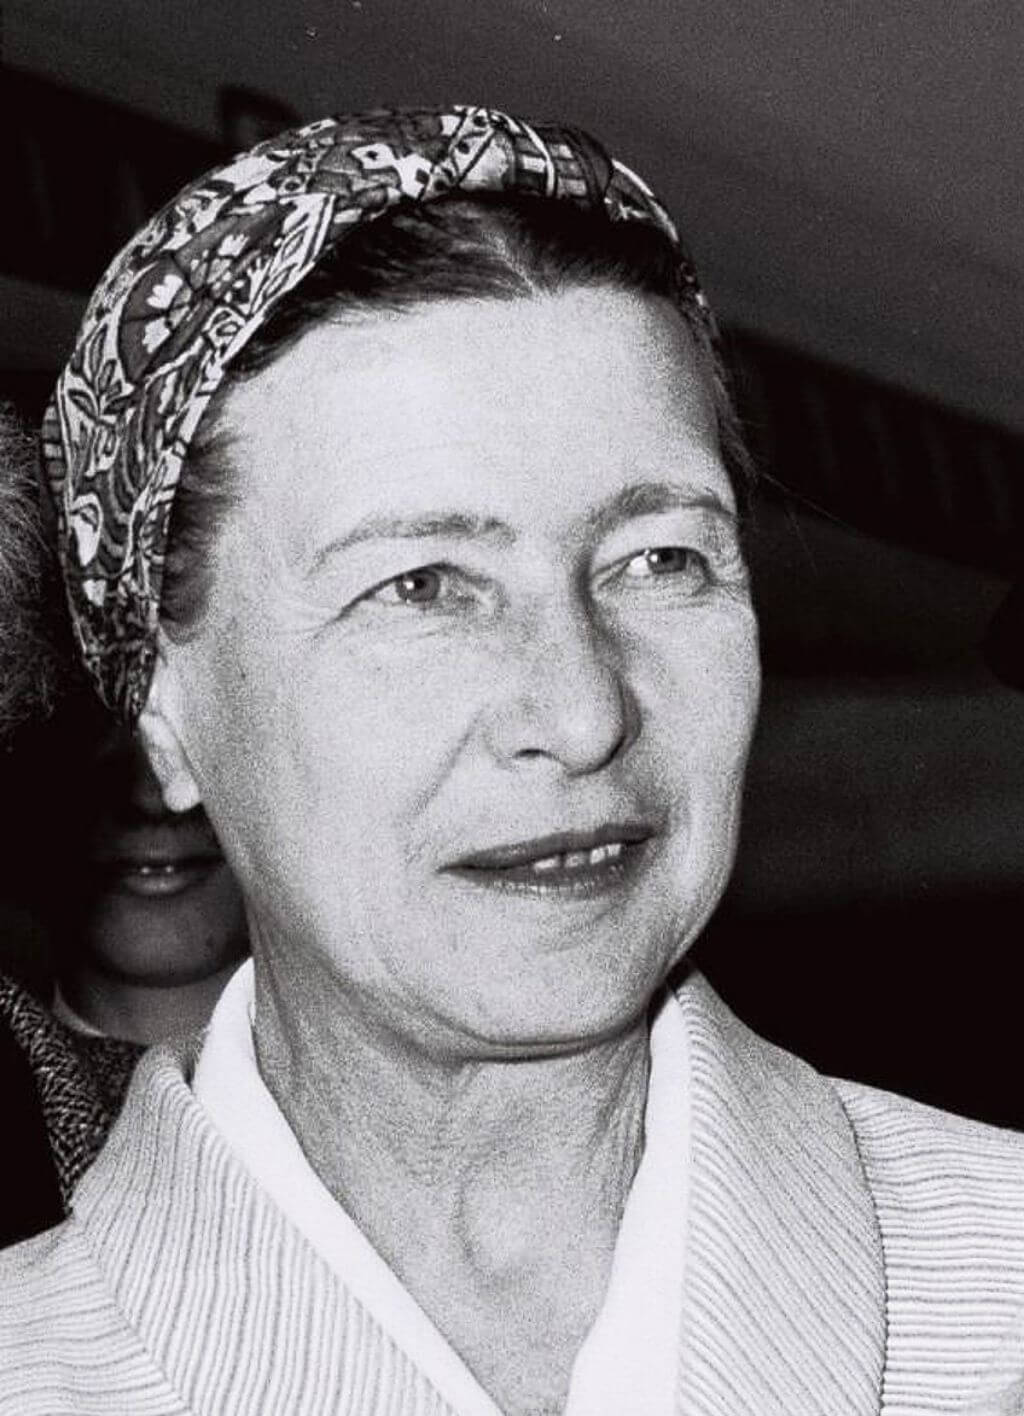 Simone de Beauvoir 1908 – 1986